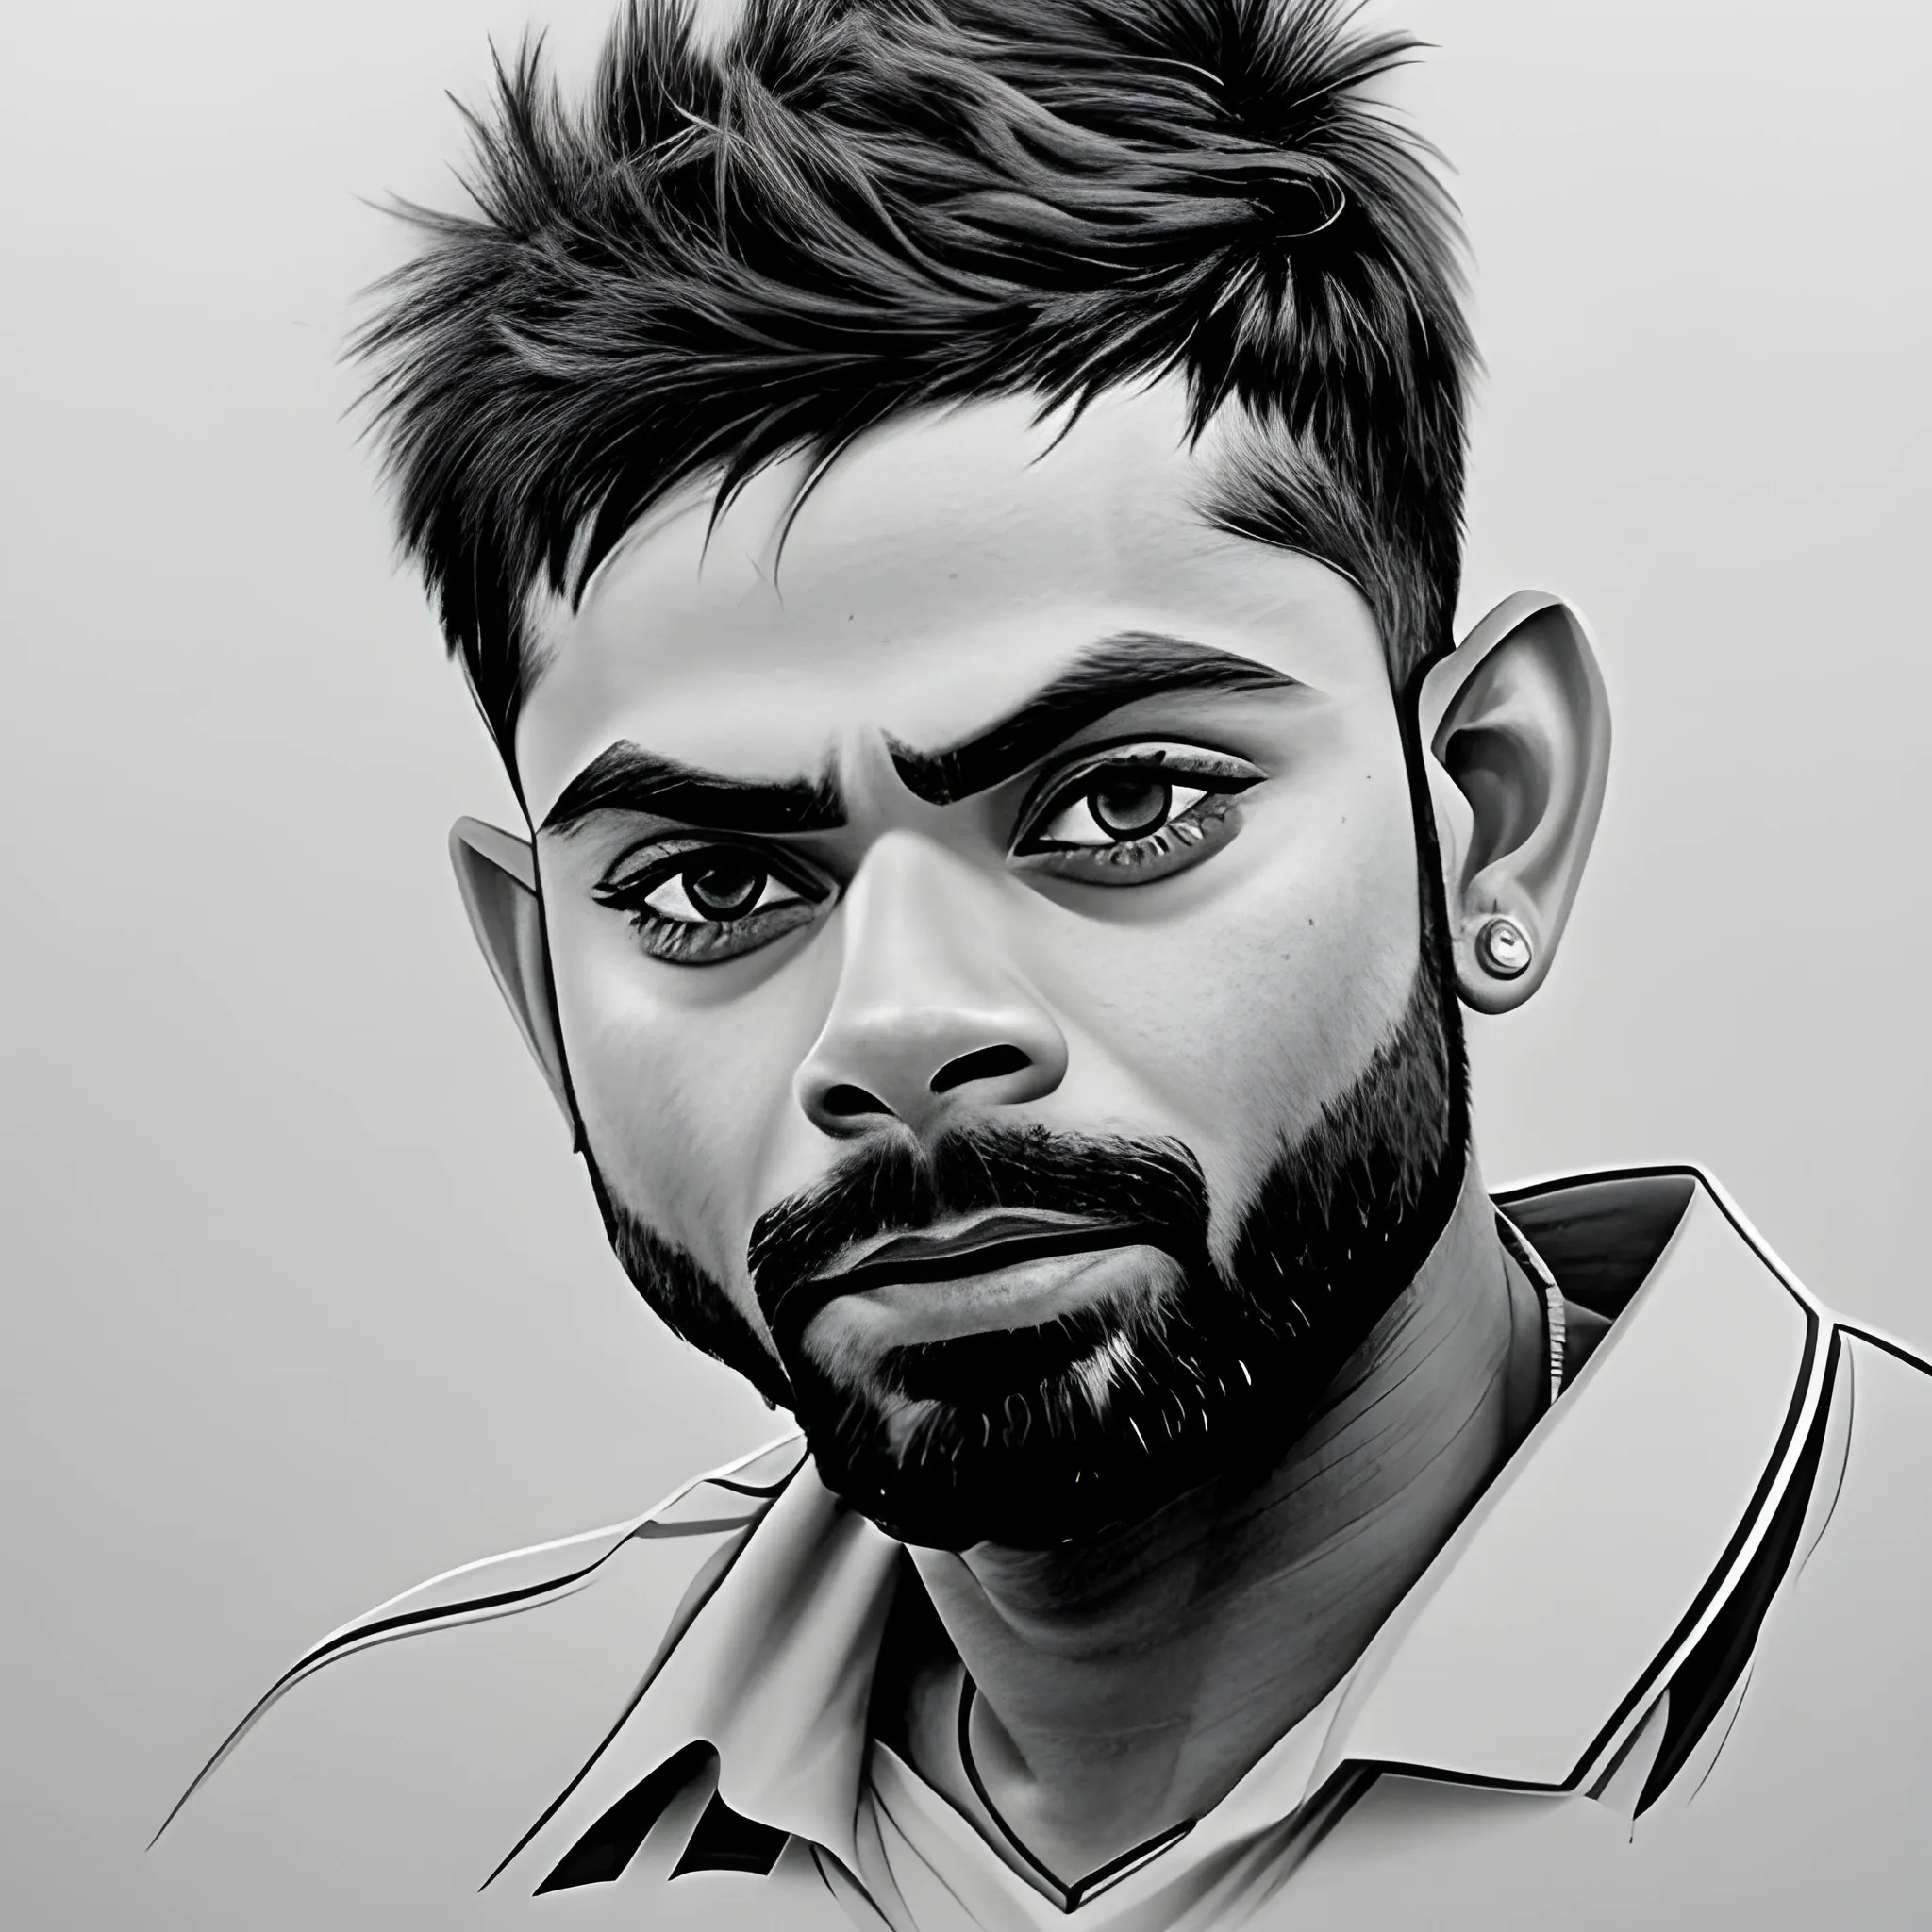 Virat kohli Indian cricketer Portrait Drawing by Dr Mubarak Muhammad Ali   Saatchi Art